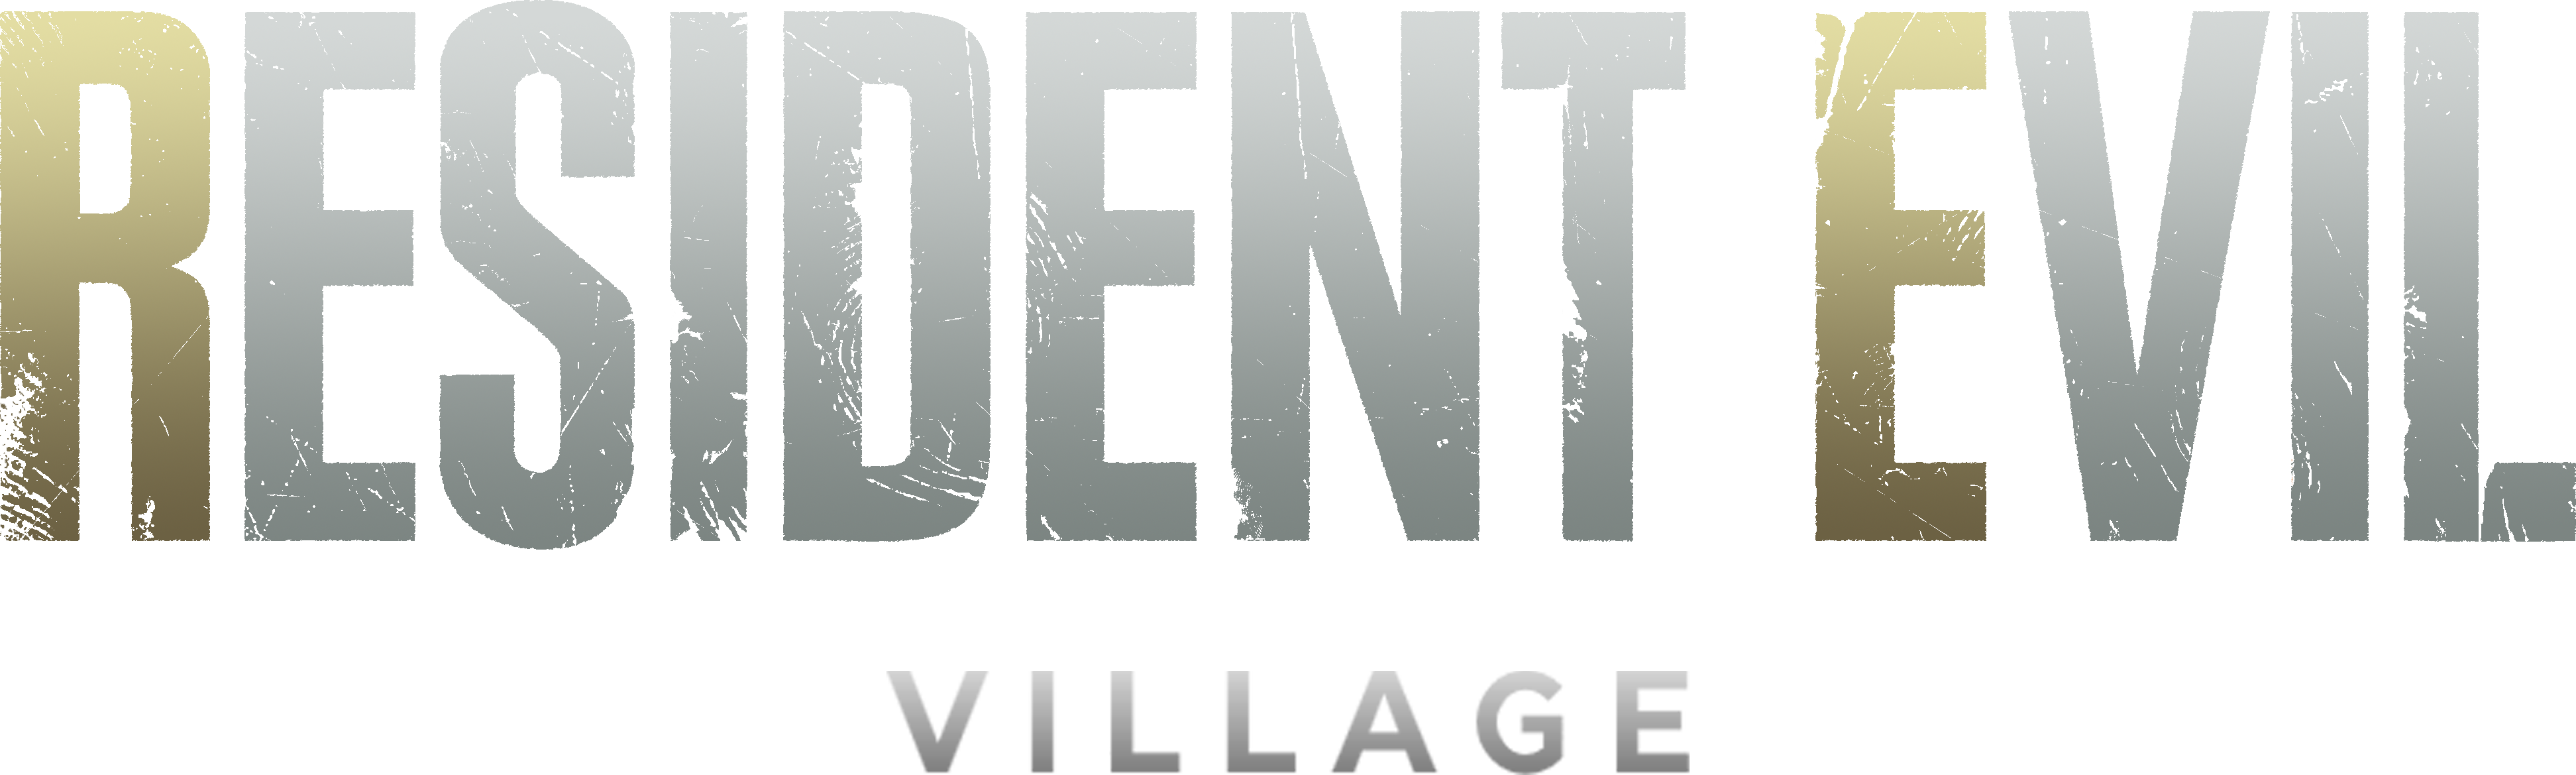 Resident Evil Logo PNG Images Transparent Background | PNG Play - Part 2